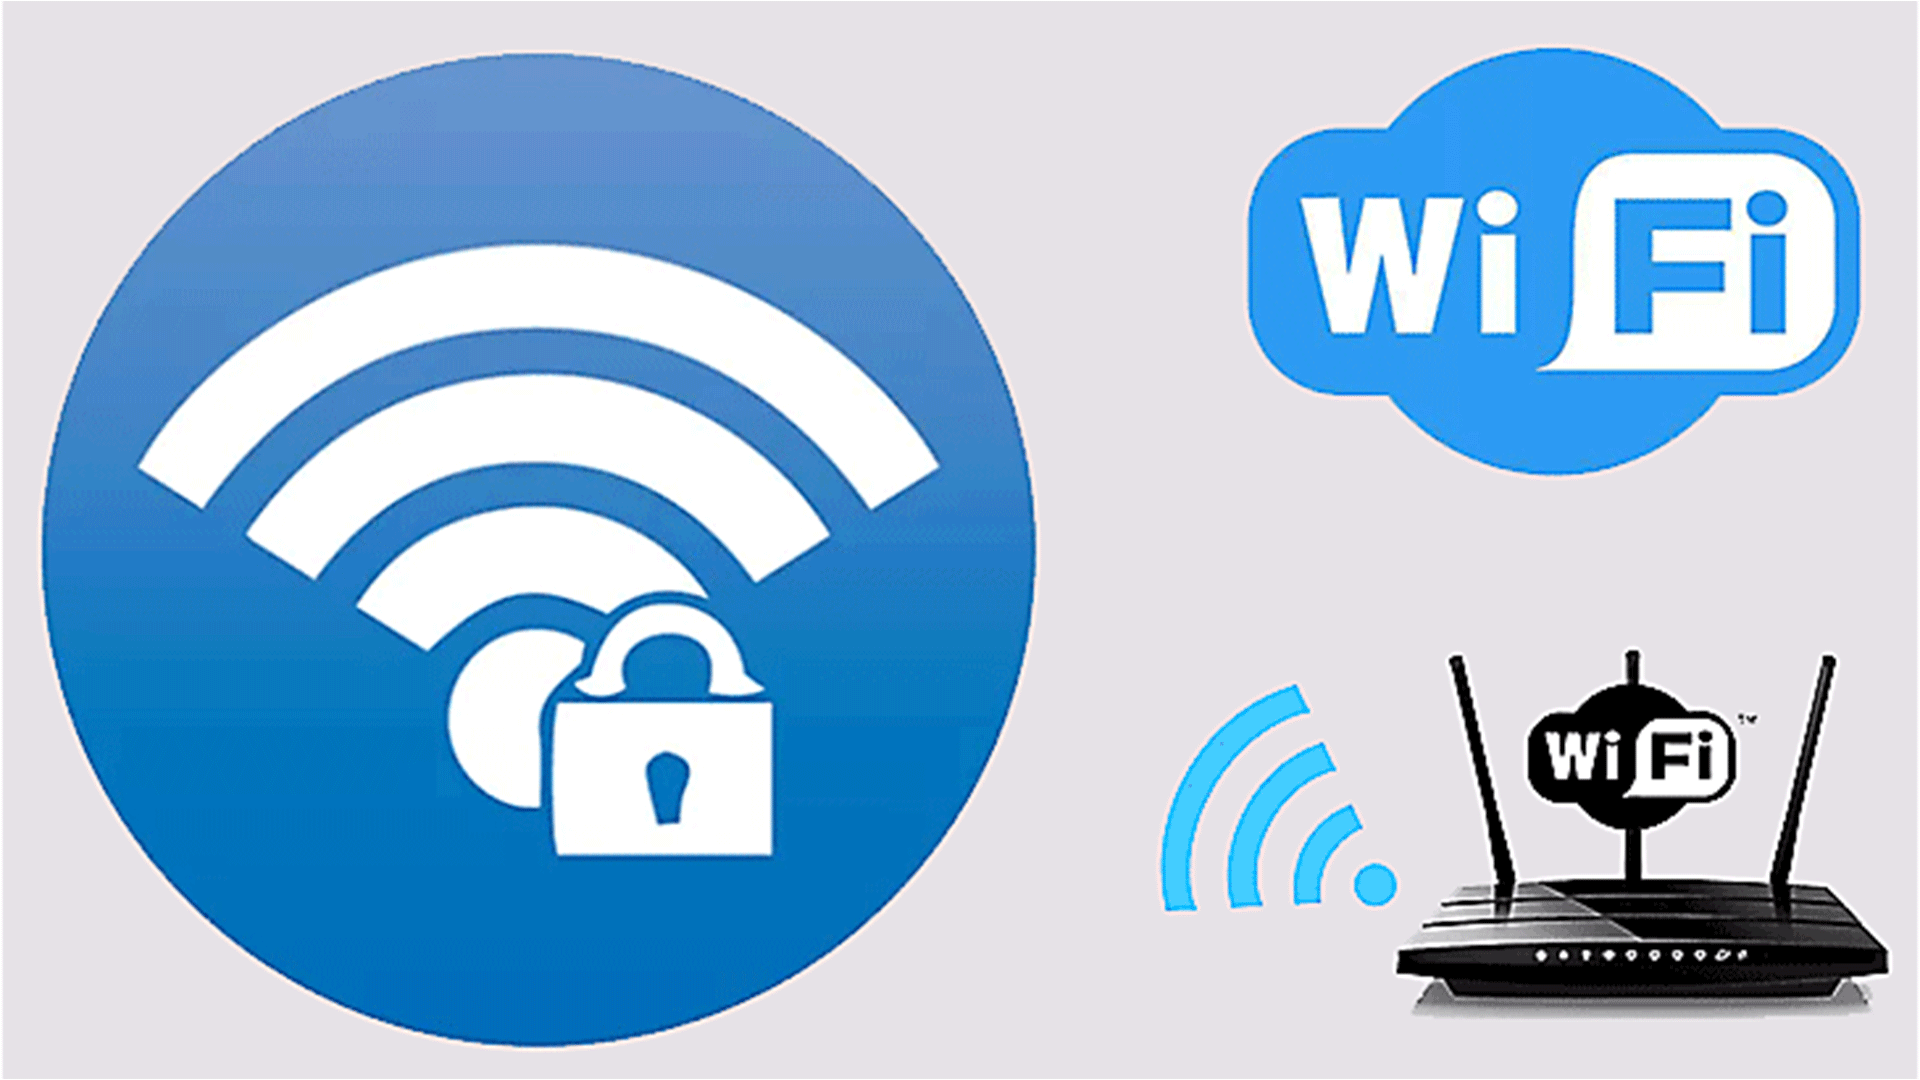 Fora pro wi fi. Беспроводная сеть Wi-Fi. Беспроводное соединение Wi-Fi. Пароль вай фай.